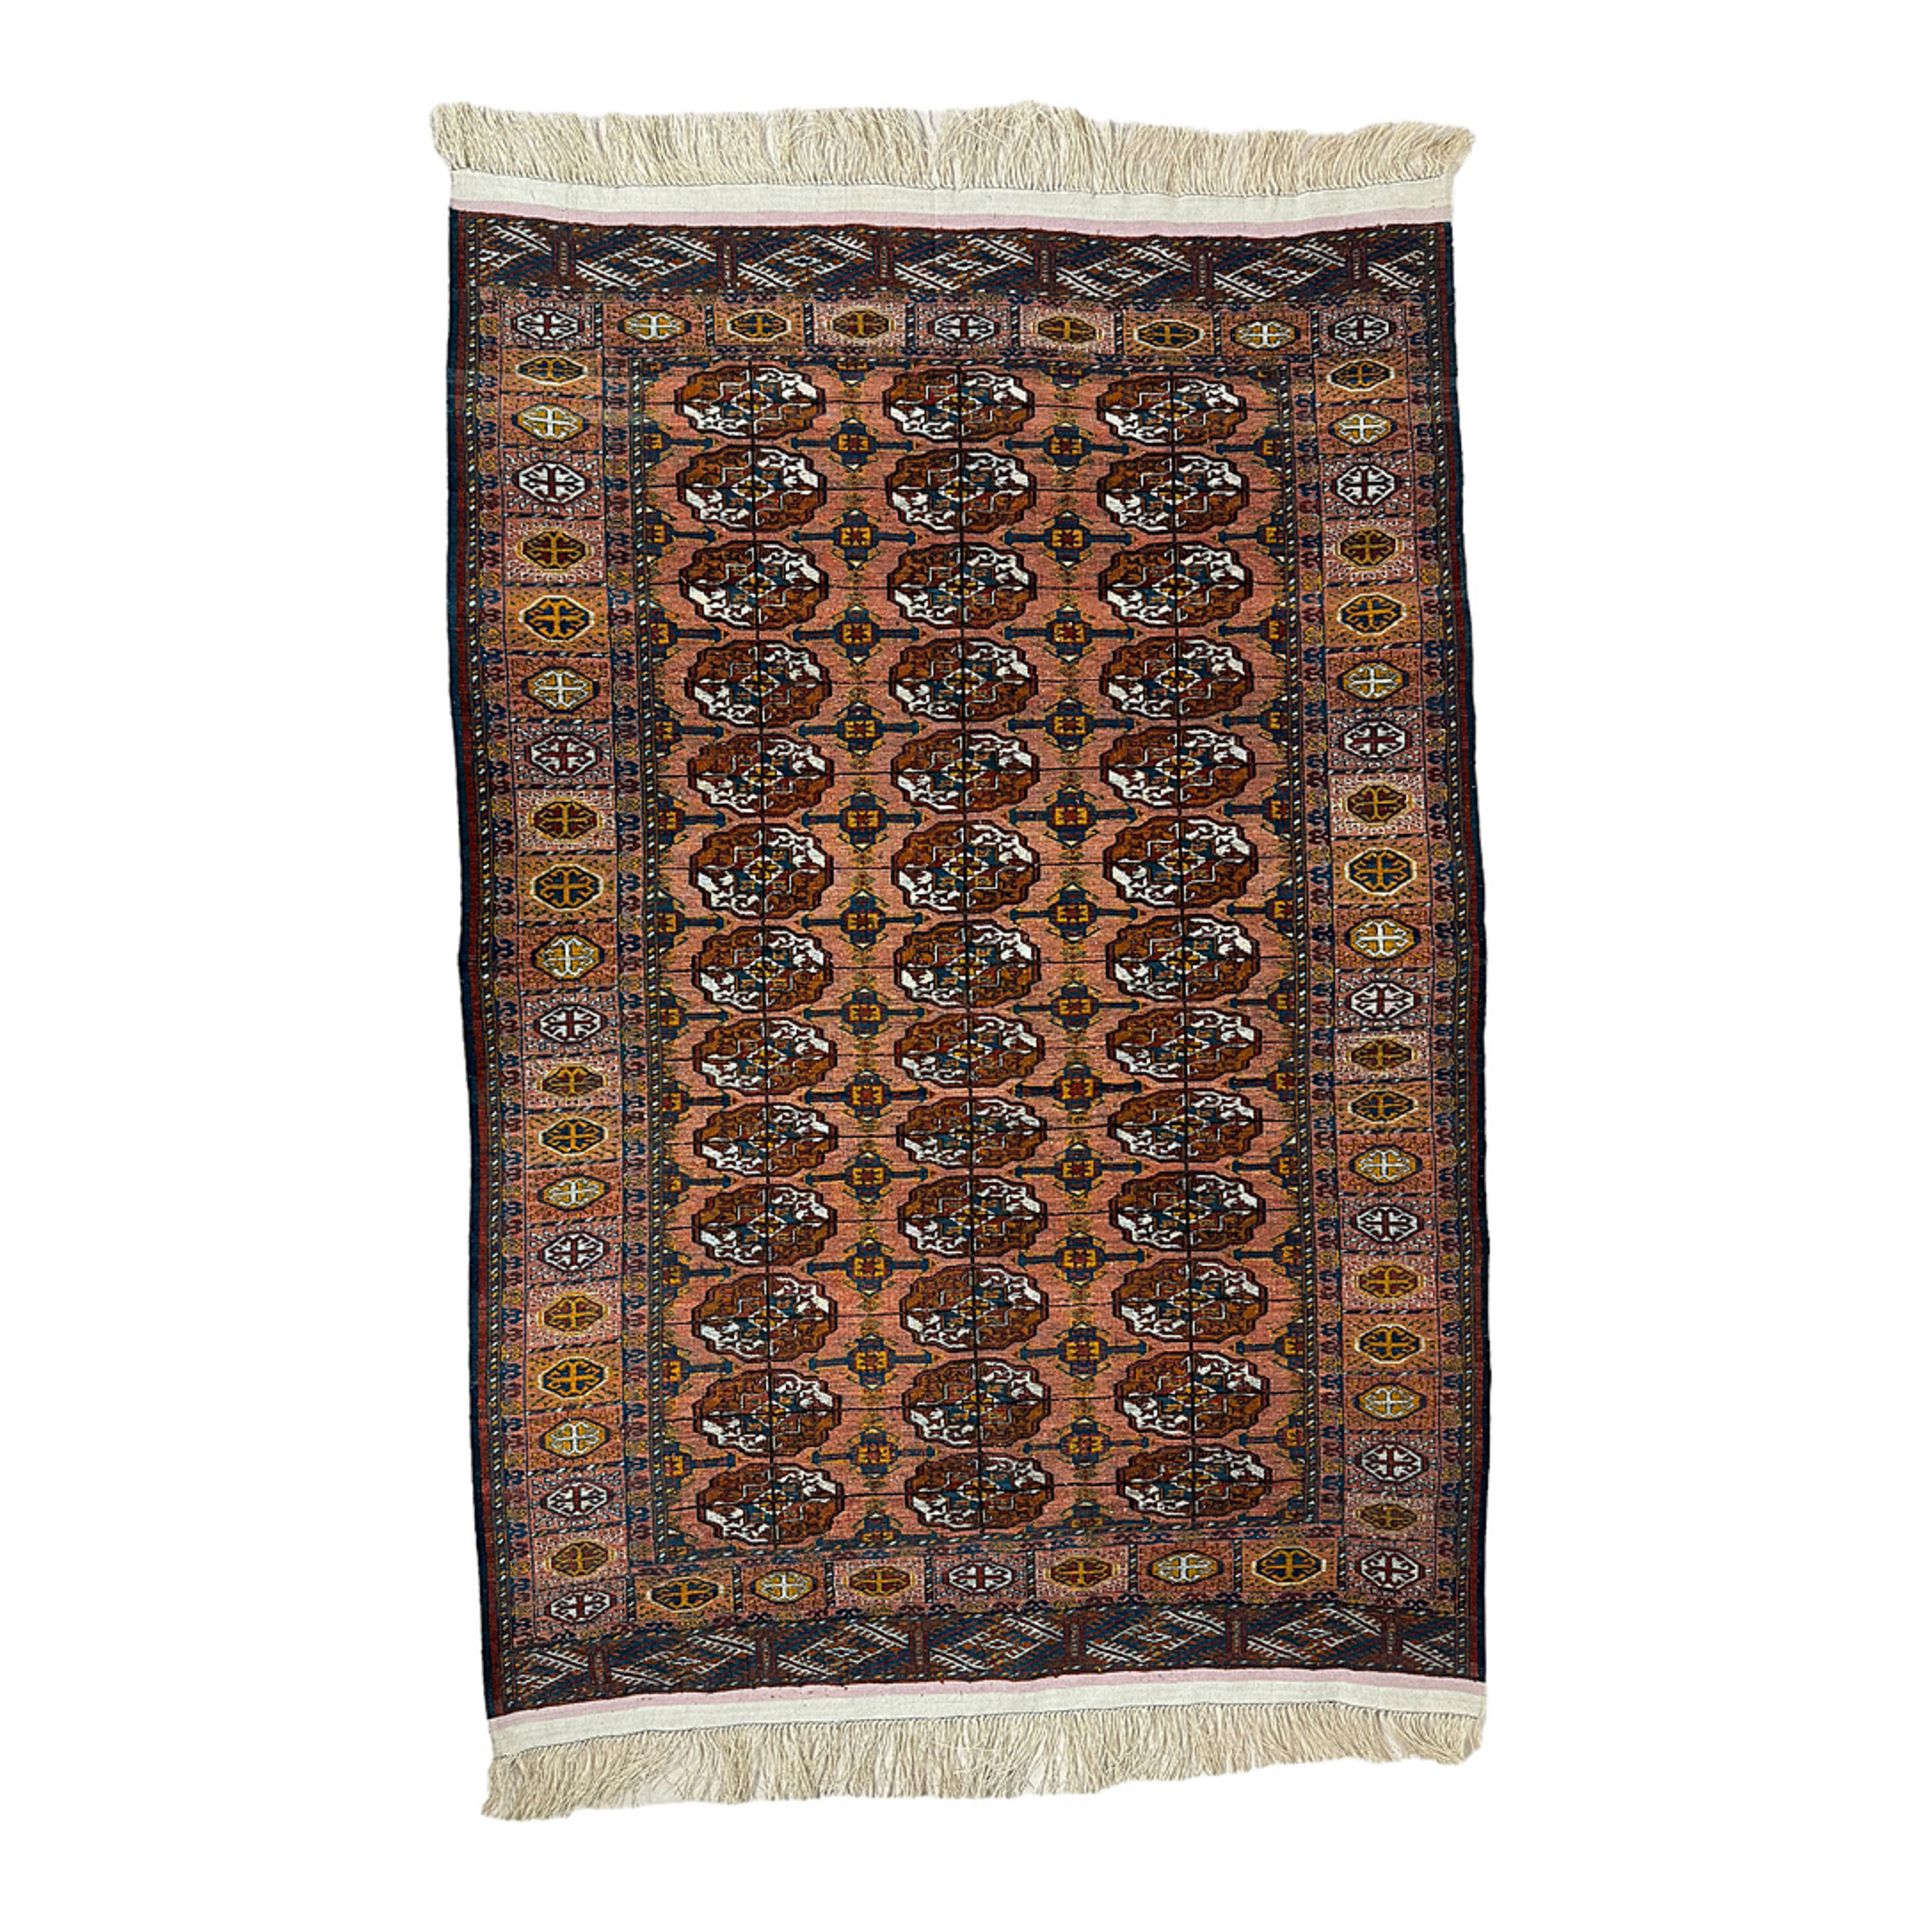 Carpet, Pakistan, 20th century - Image 2 of 5